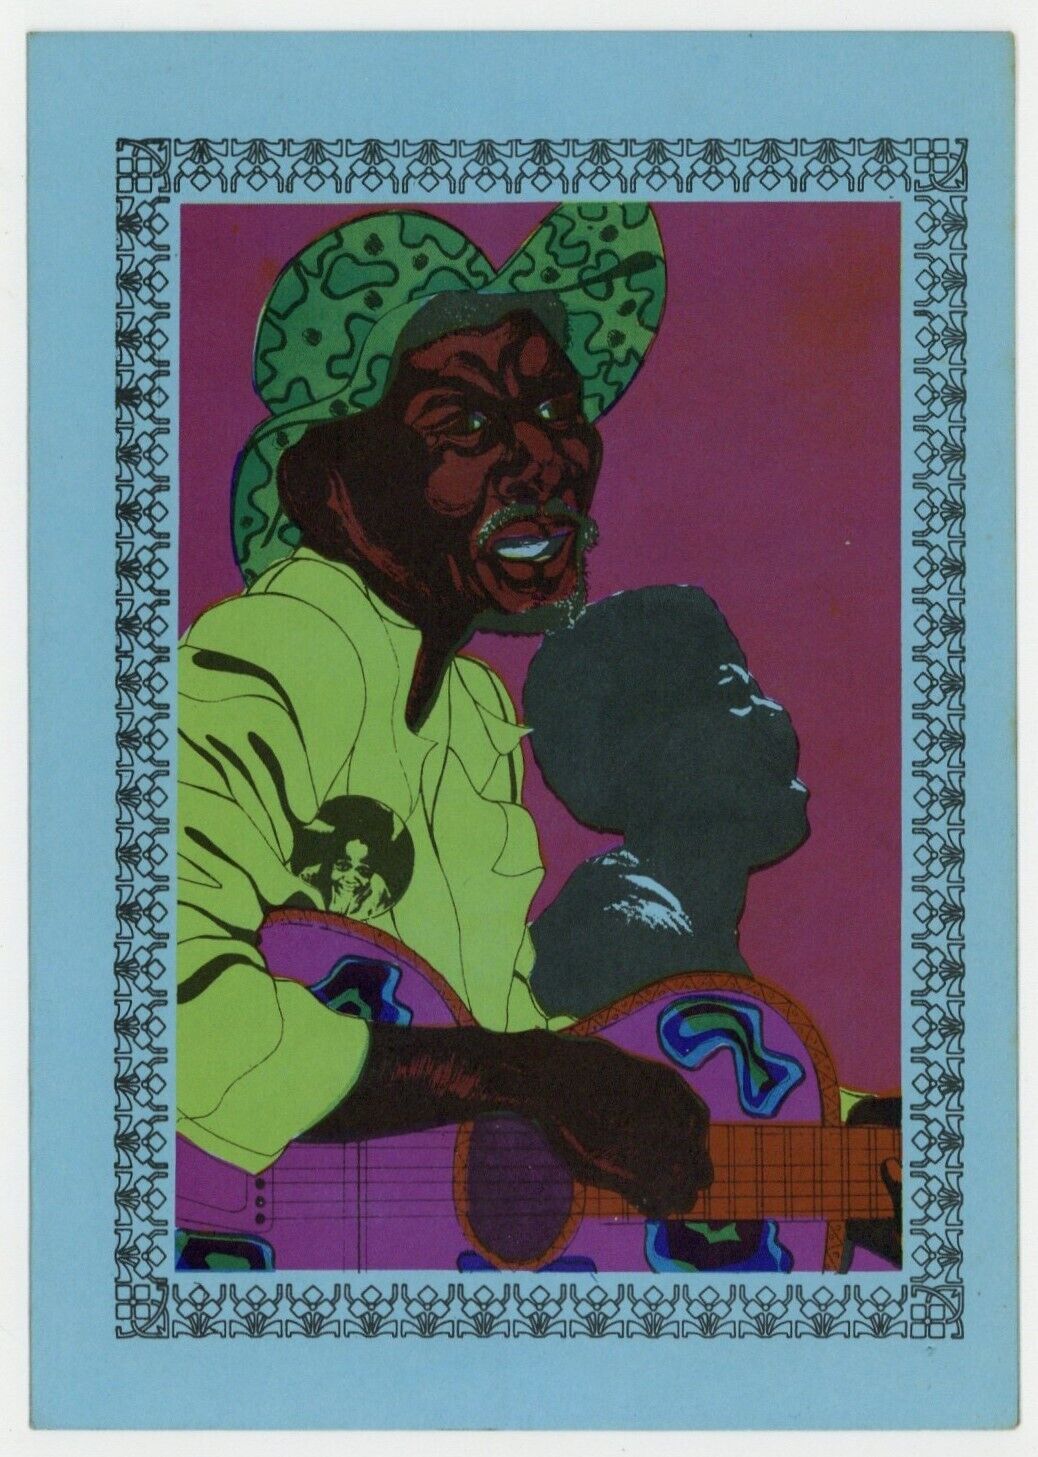 Emory Douglas 1973 Black Panther Party Original Civil Rights Art LeRoi Jones